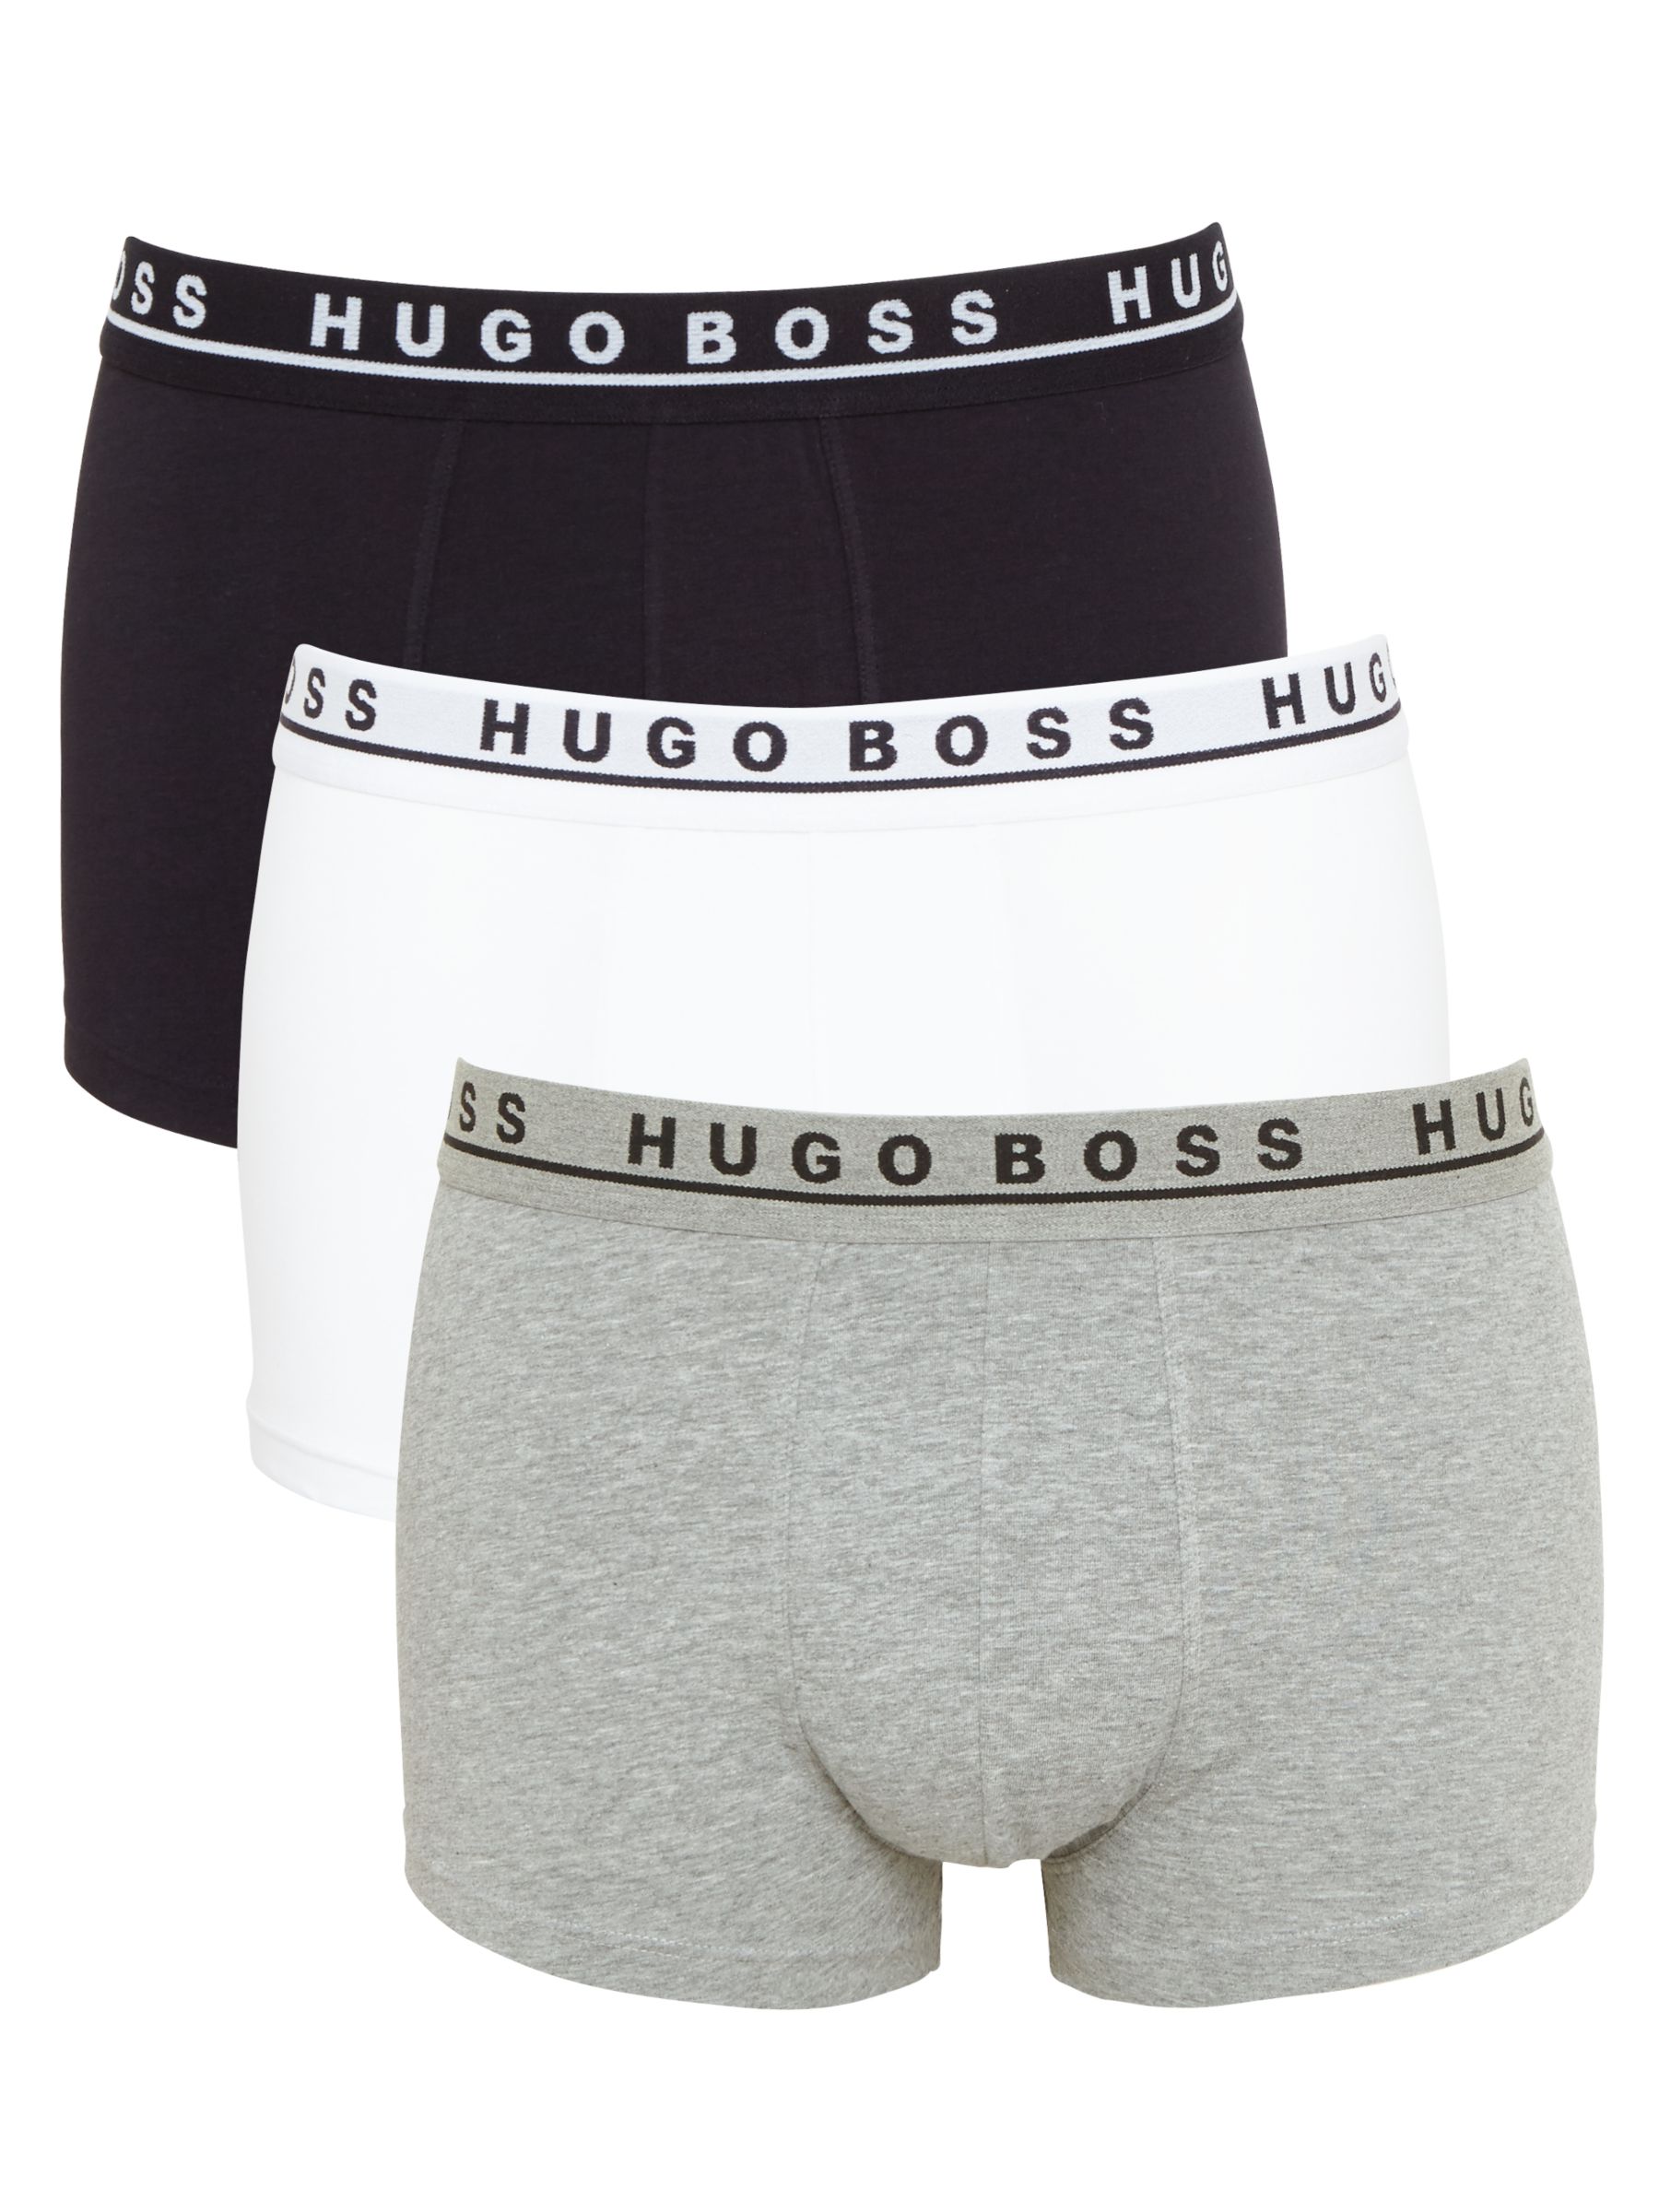 hugo boss men's underwear